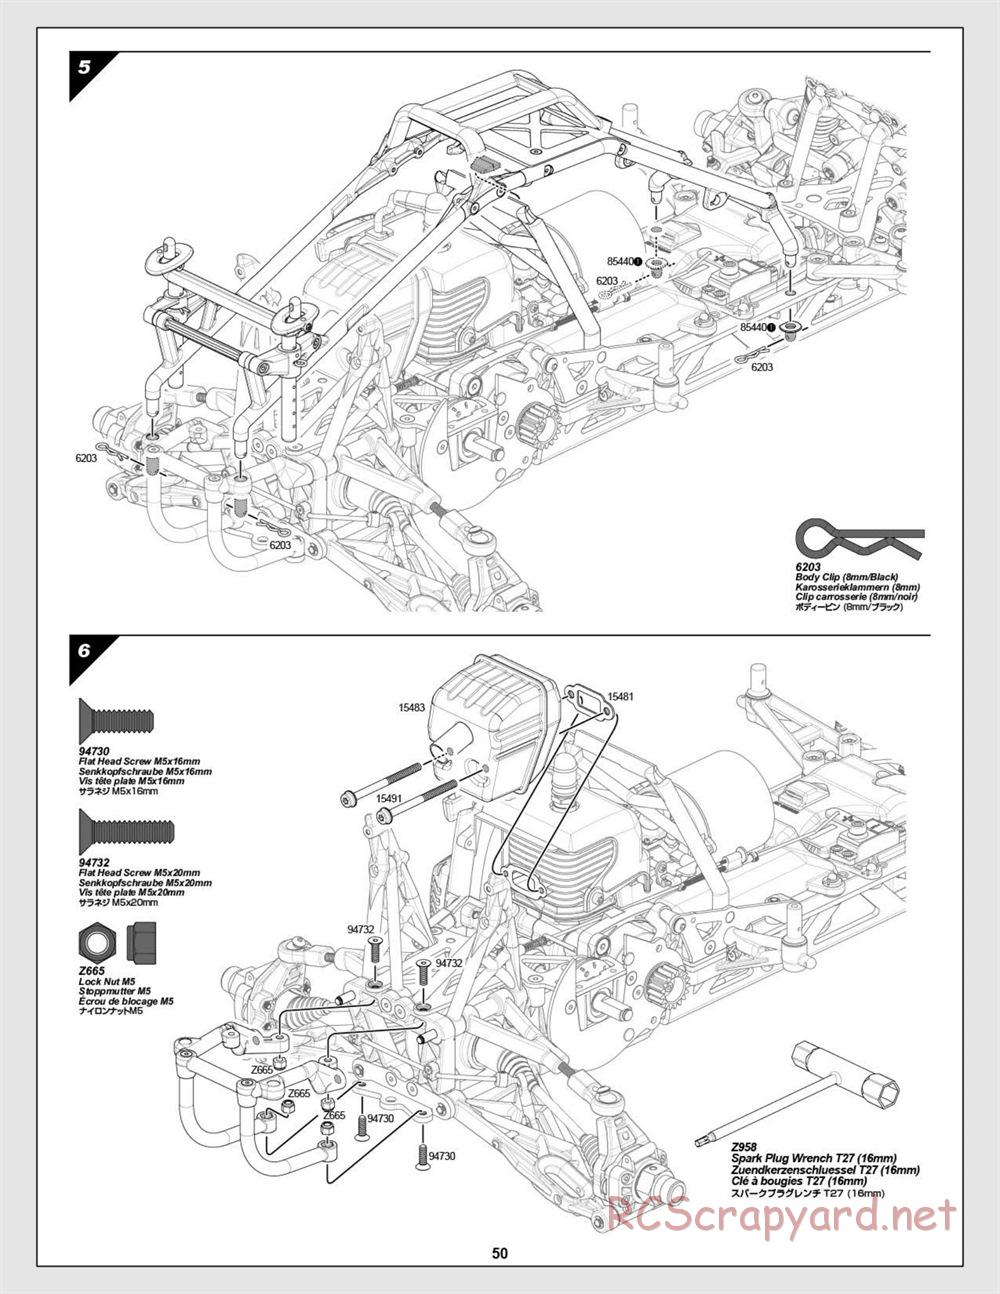 HPI - Baja 5T - Manual - Page 50